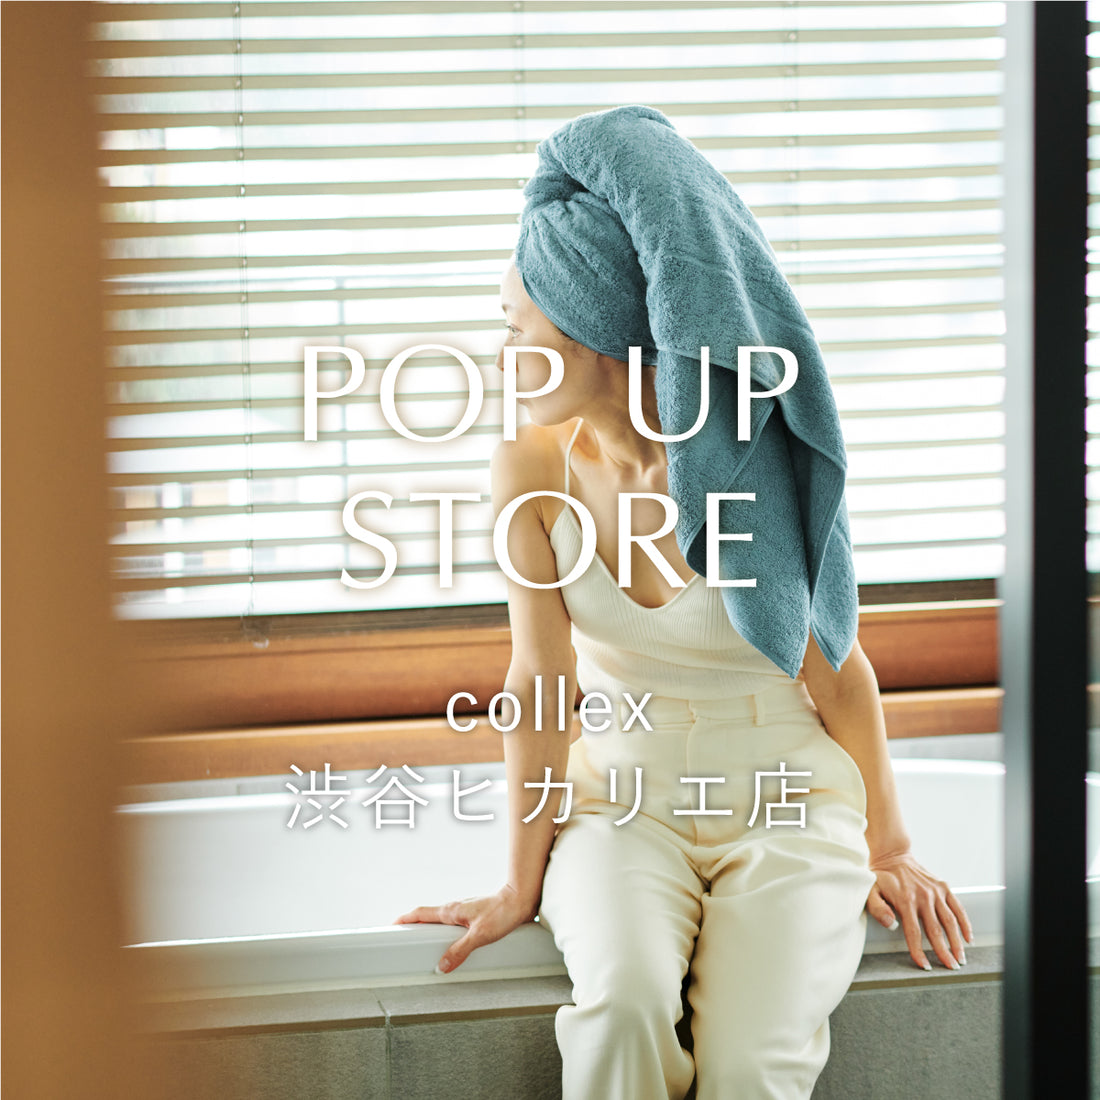 POP UP STORE Collex 渋谷ヒカリエ シンクス店 7/23（日)まで開催中